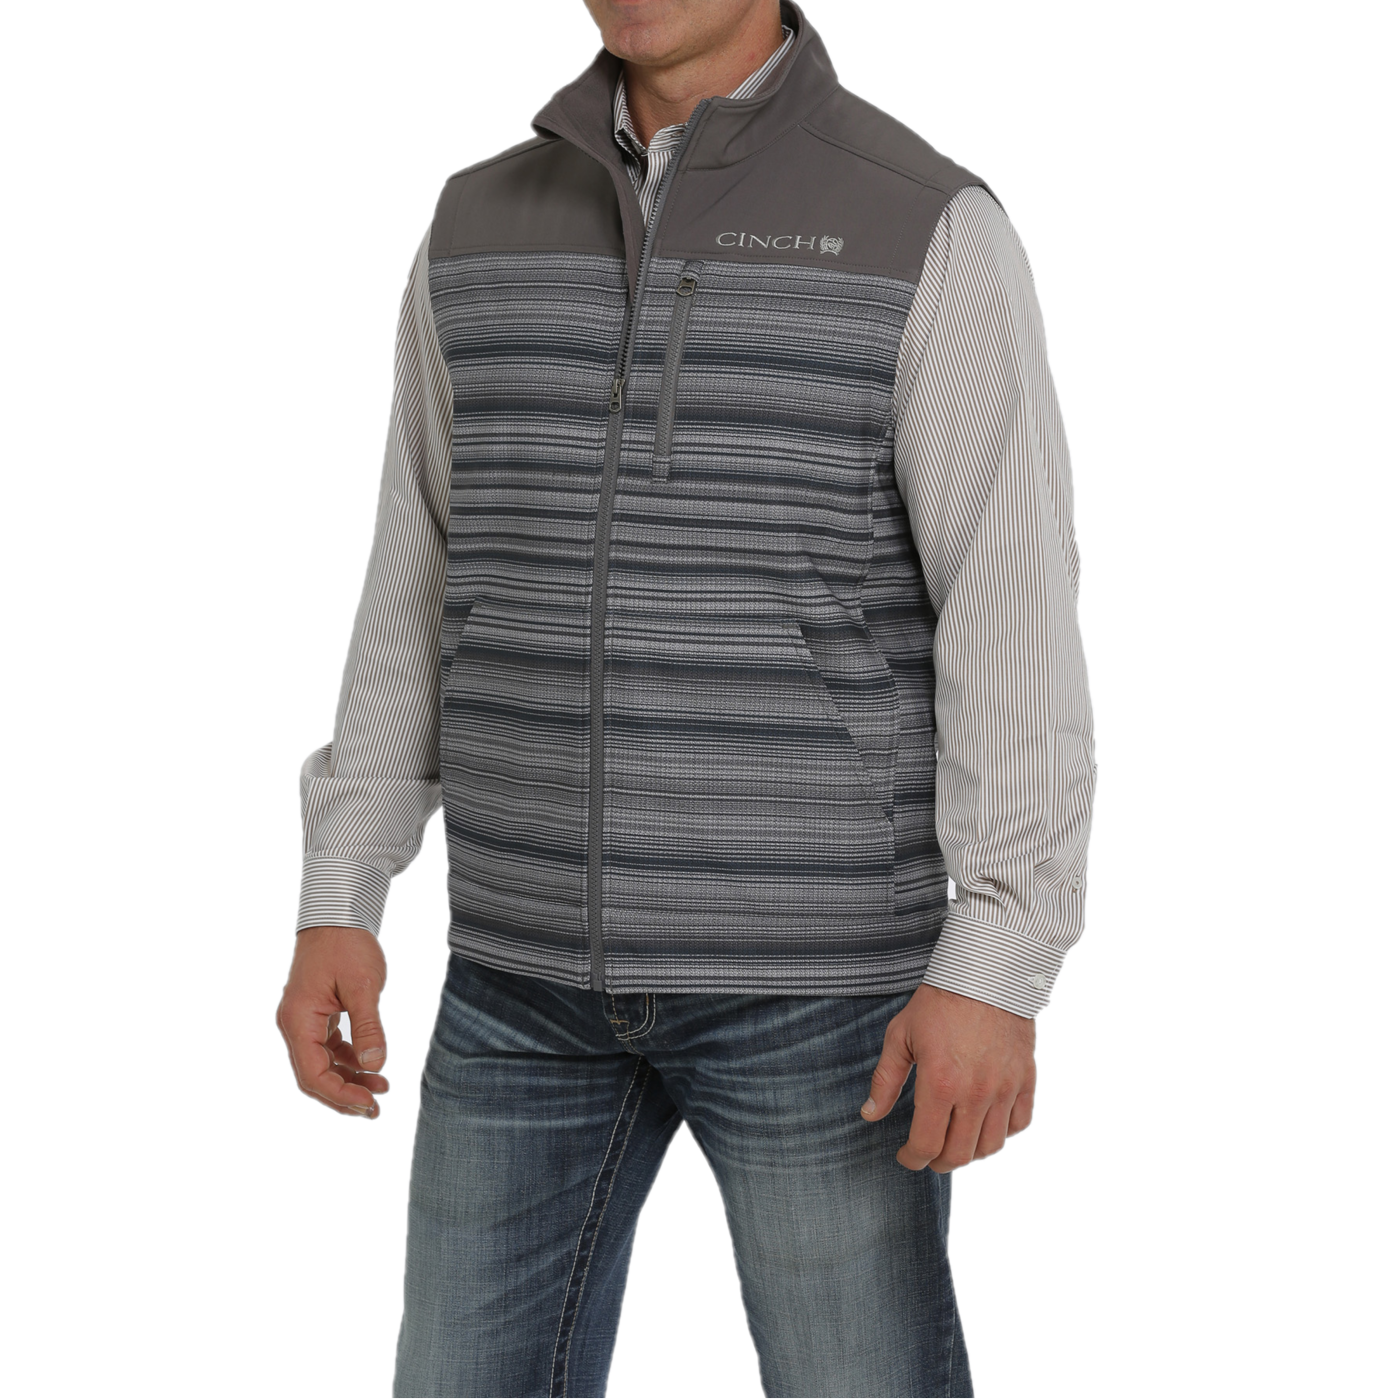 Cinch® Men's Grey Striped Bonded Vest MWV1563002